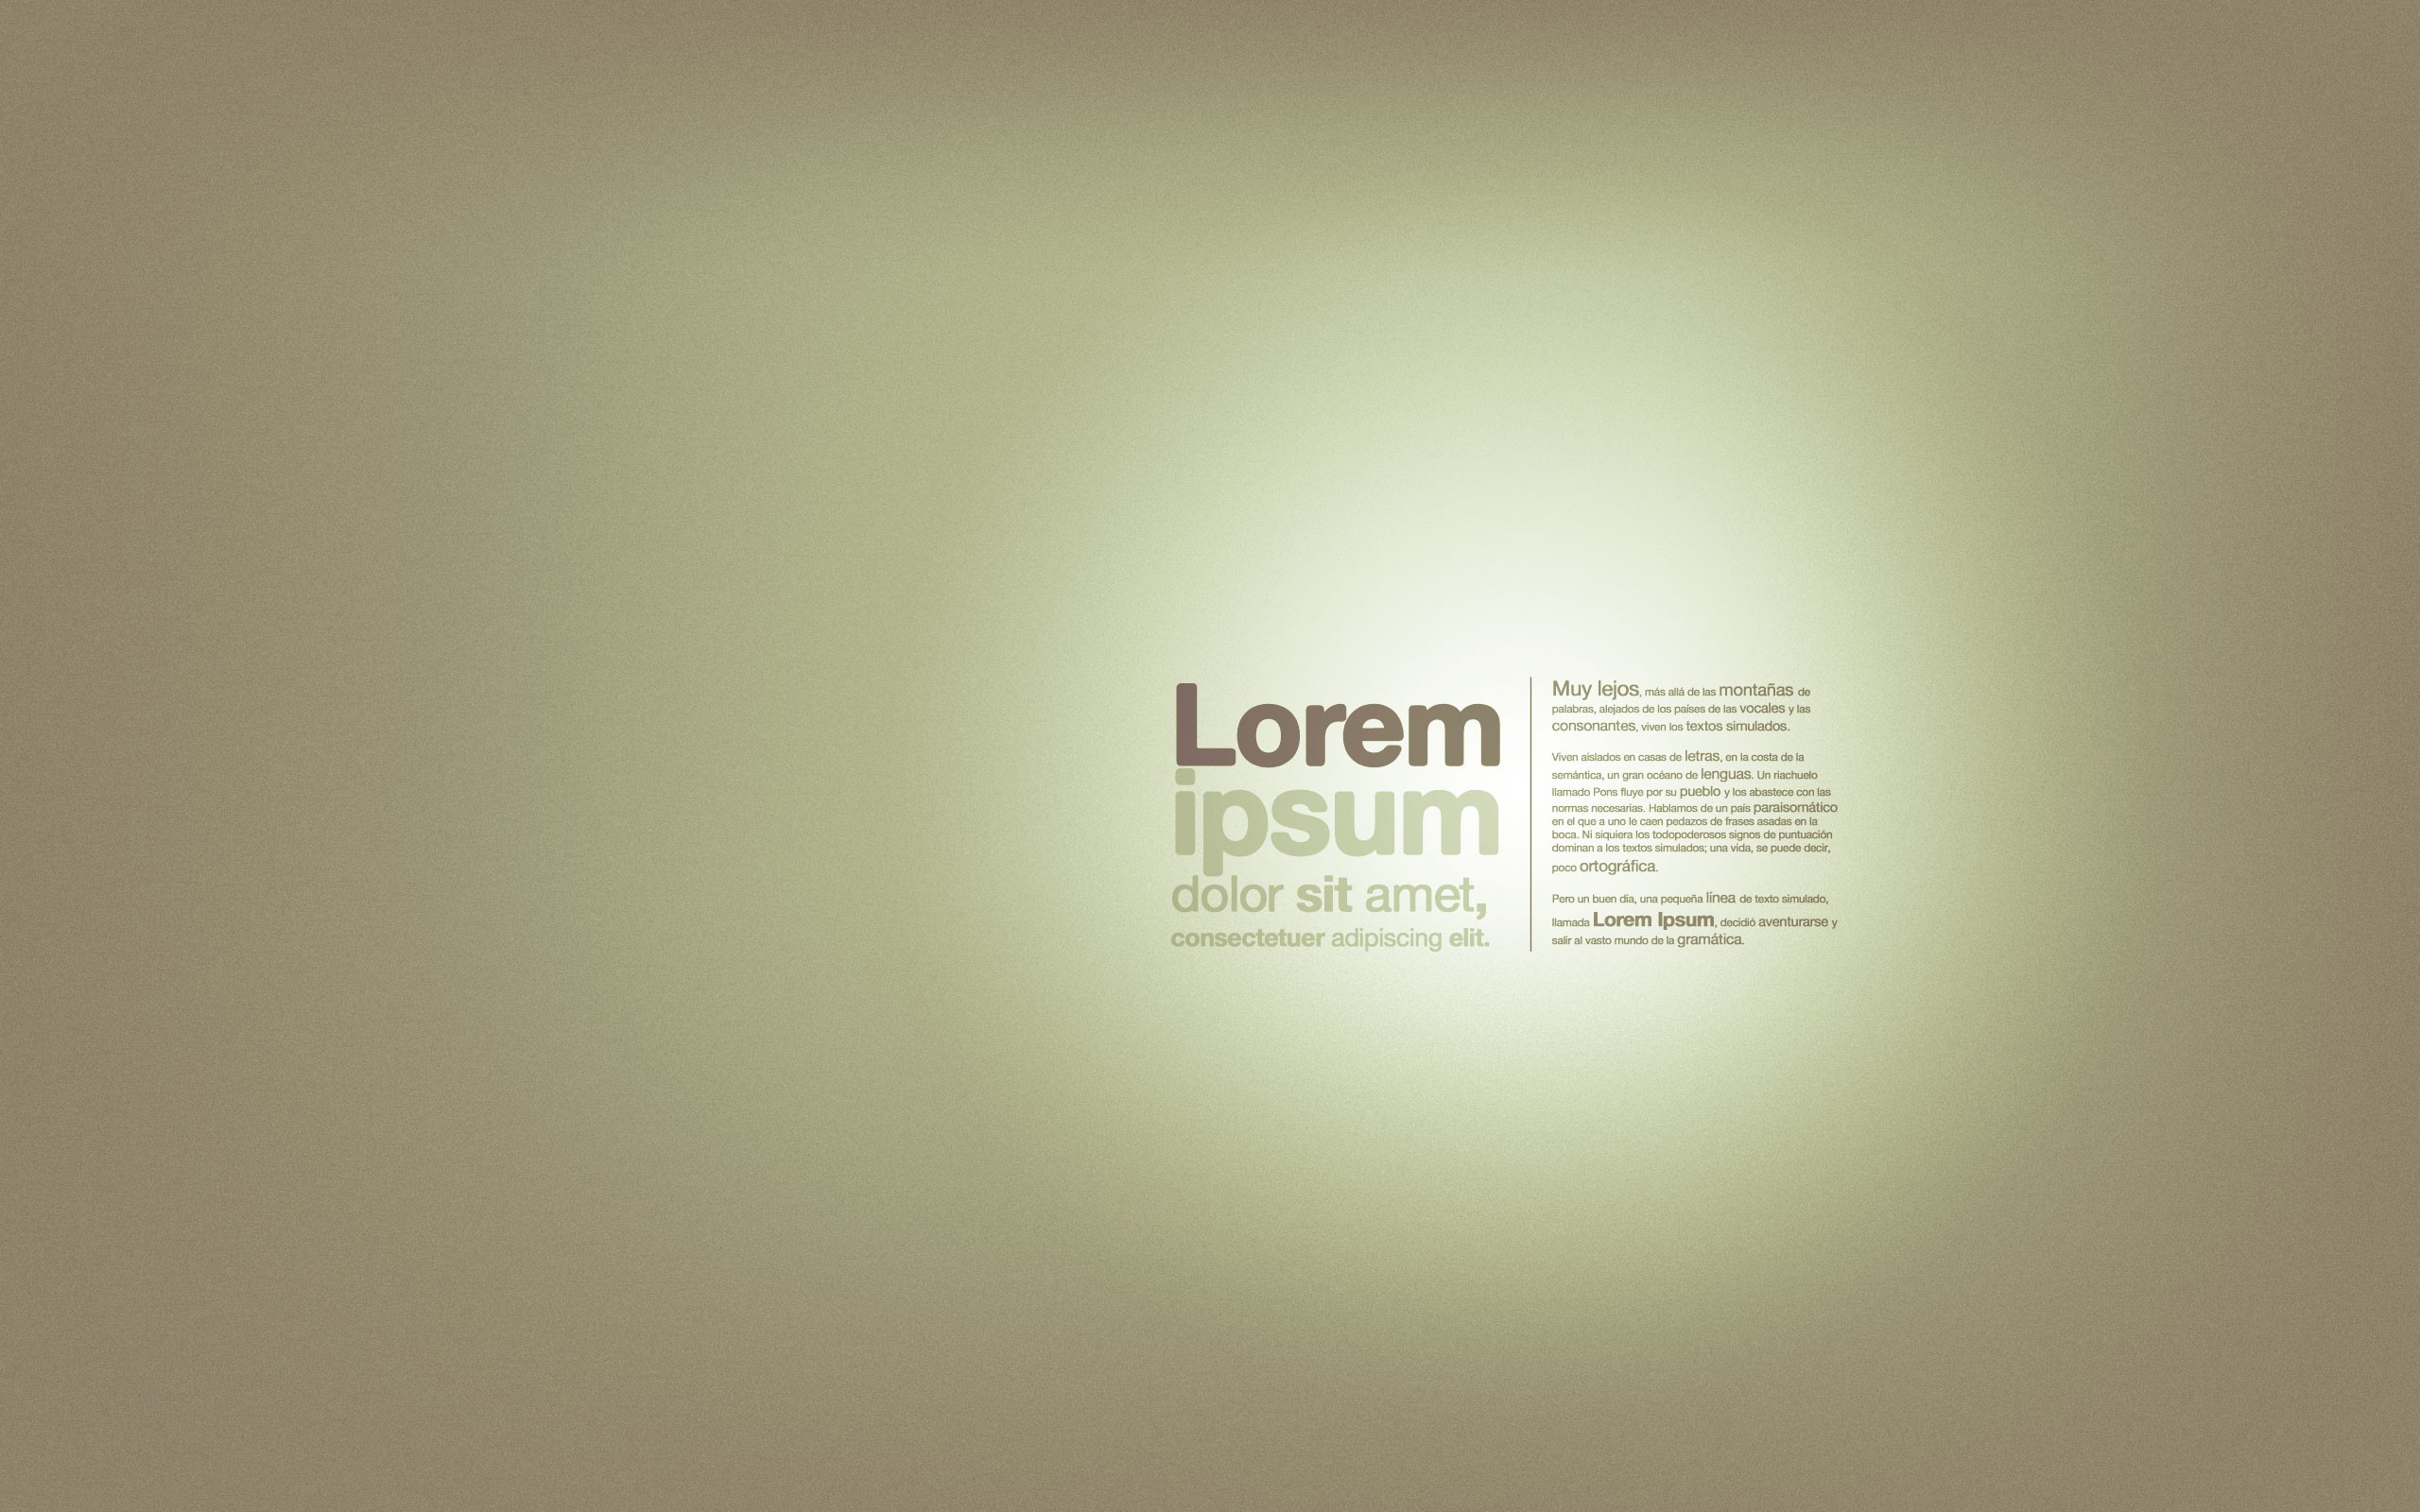 minimalistic, Spanish, latin, Lorem ipsum - desktop wallpaper